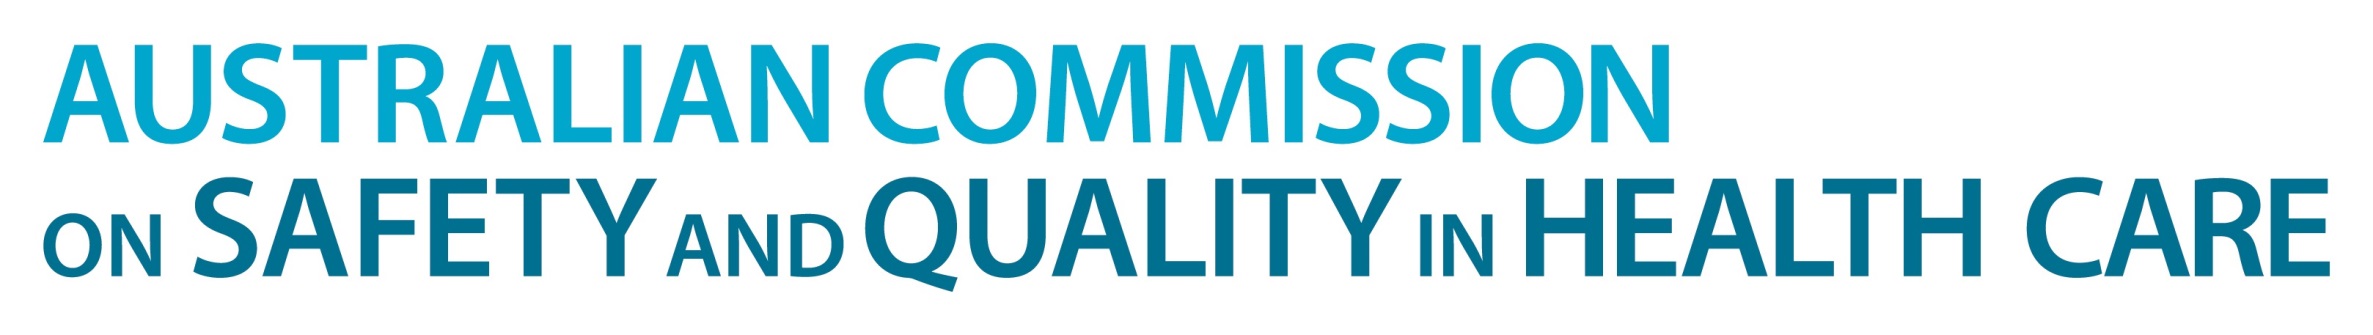 commission logo